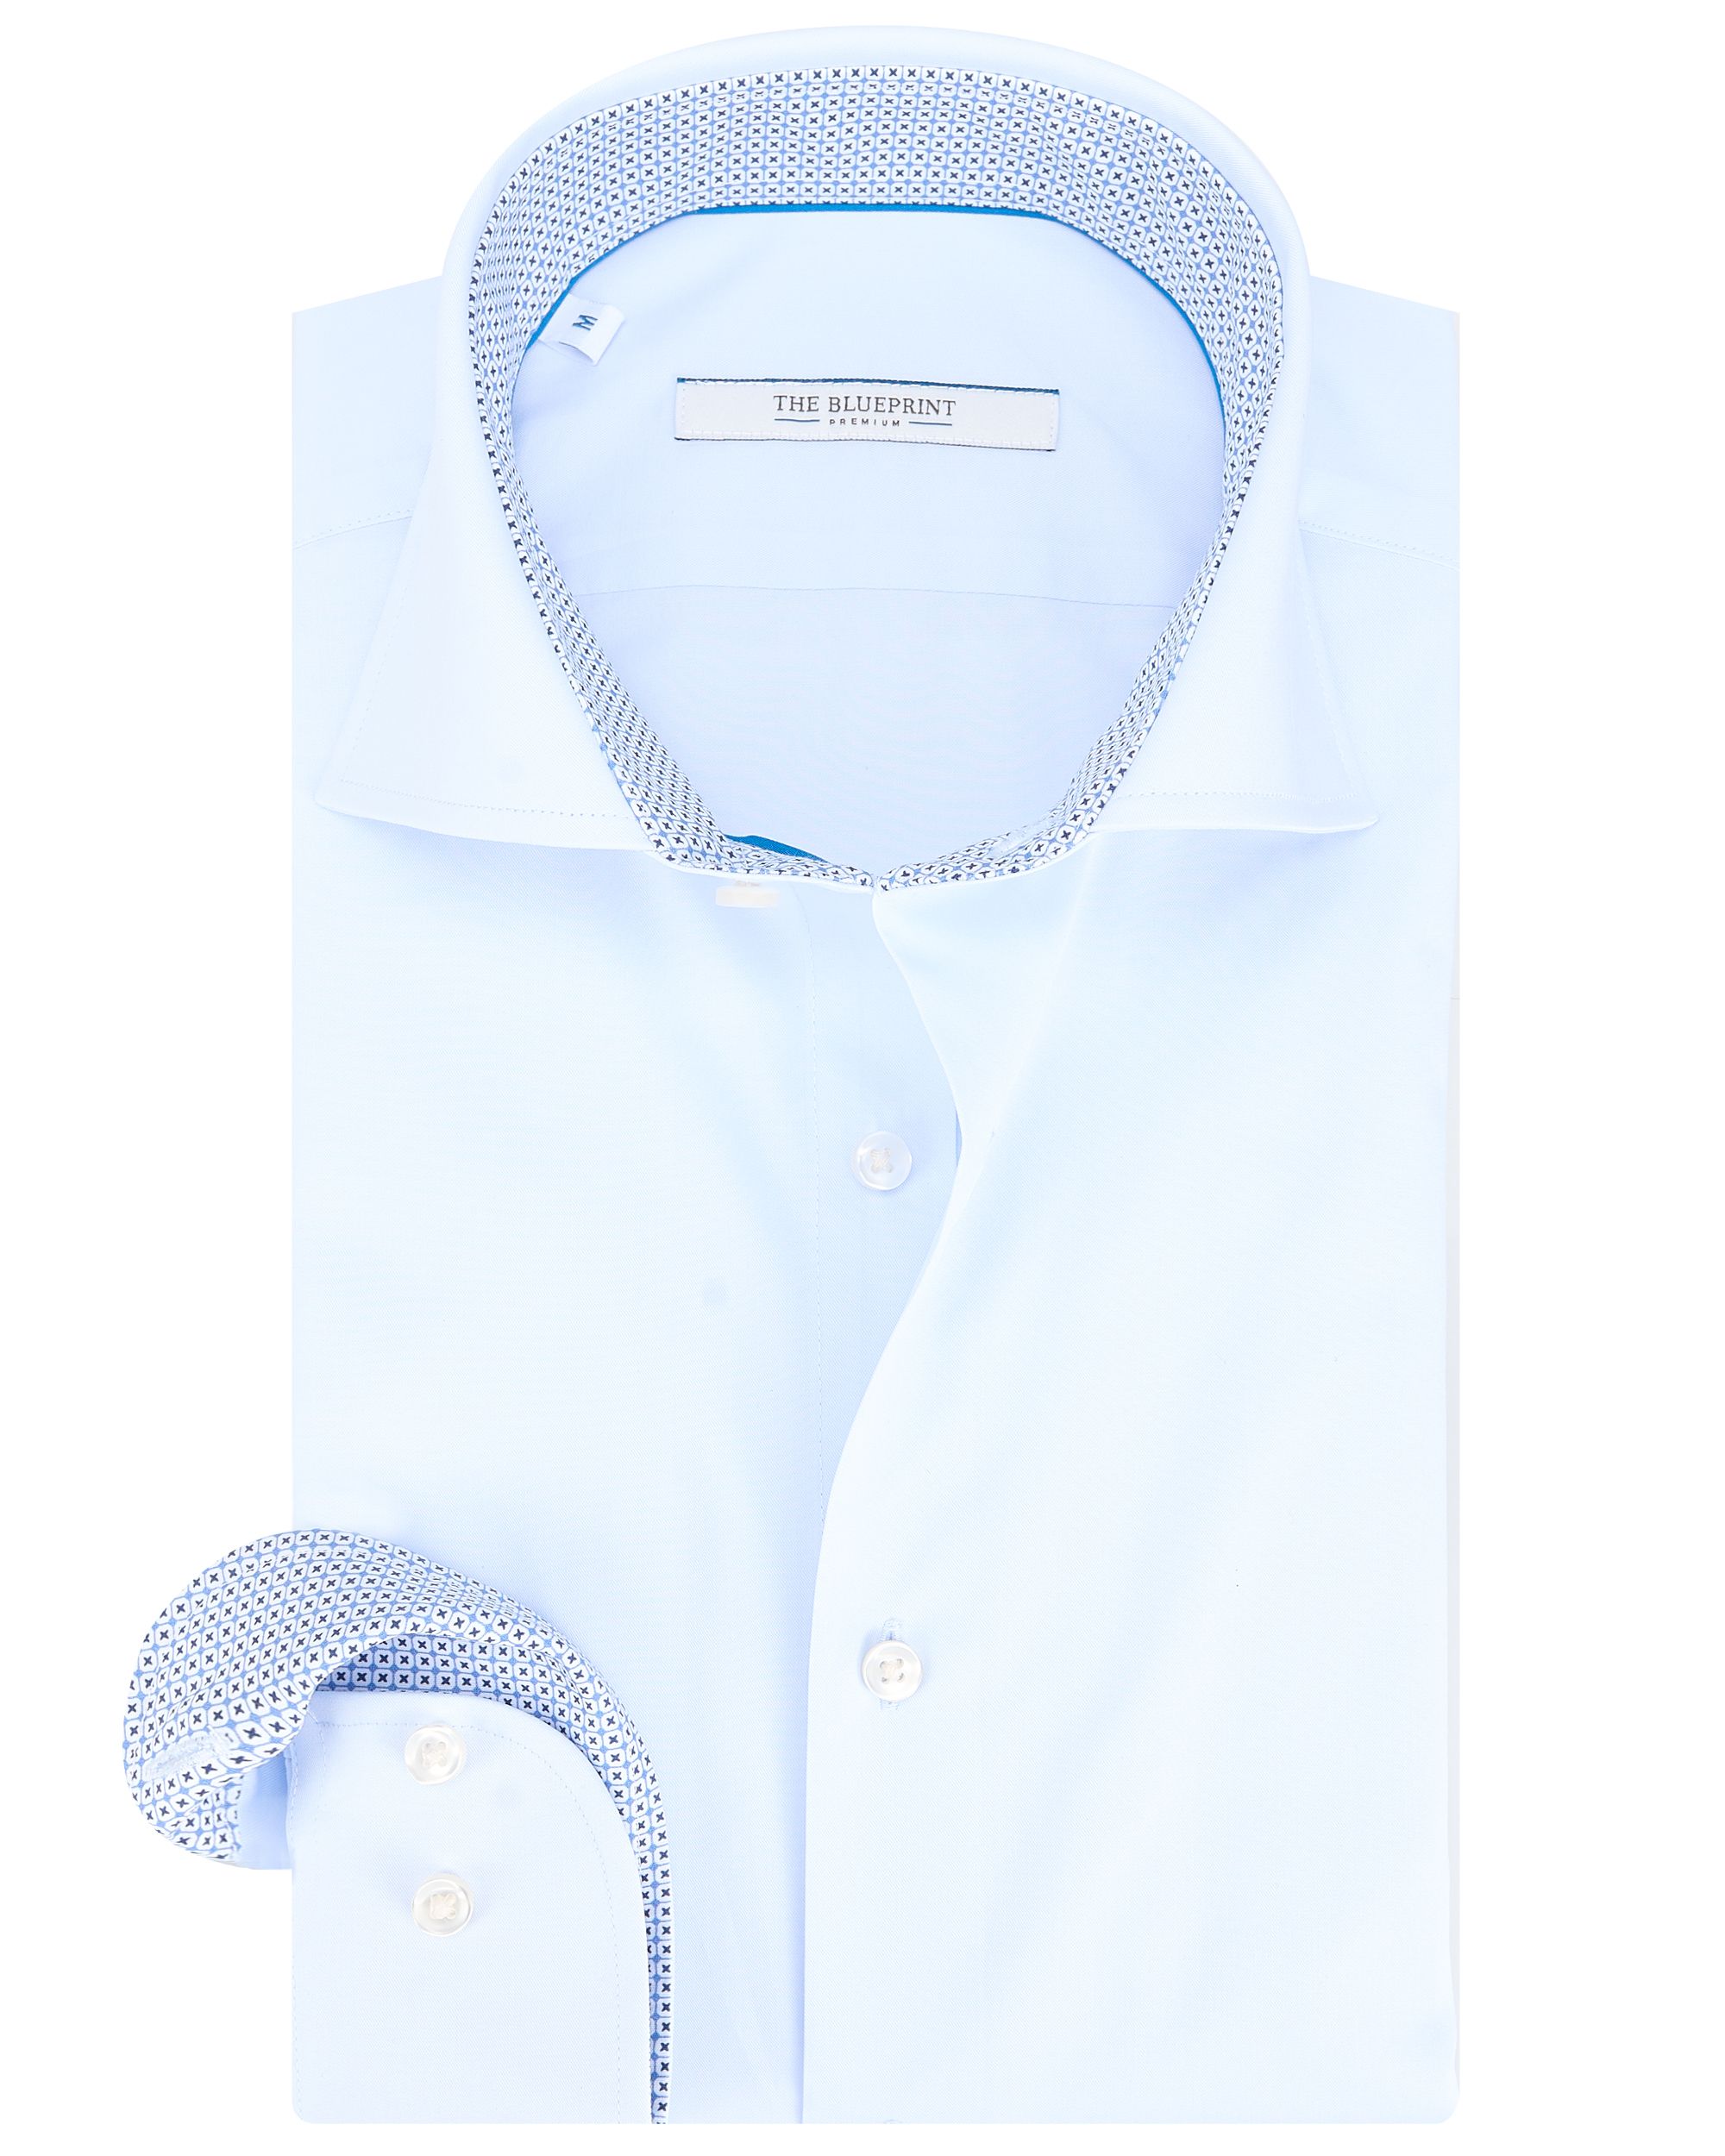 The BLUEPRINT Premium - Trendy Overhemd LM L.BLUE 092073-001-L